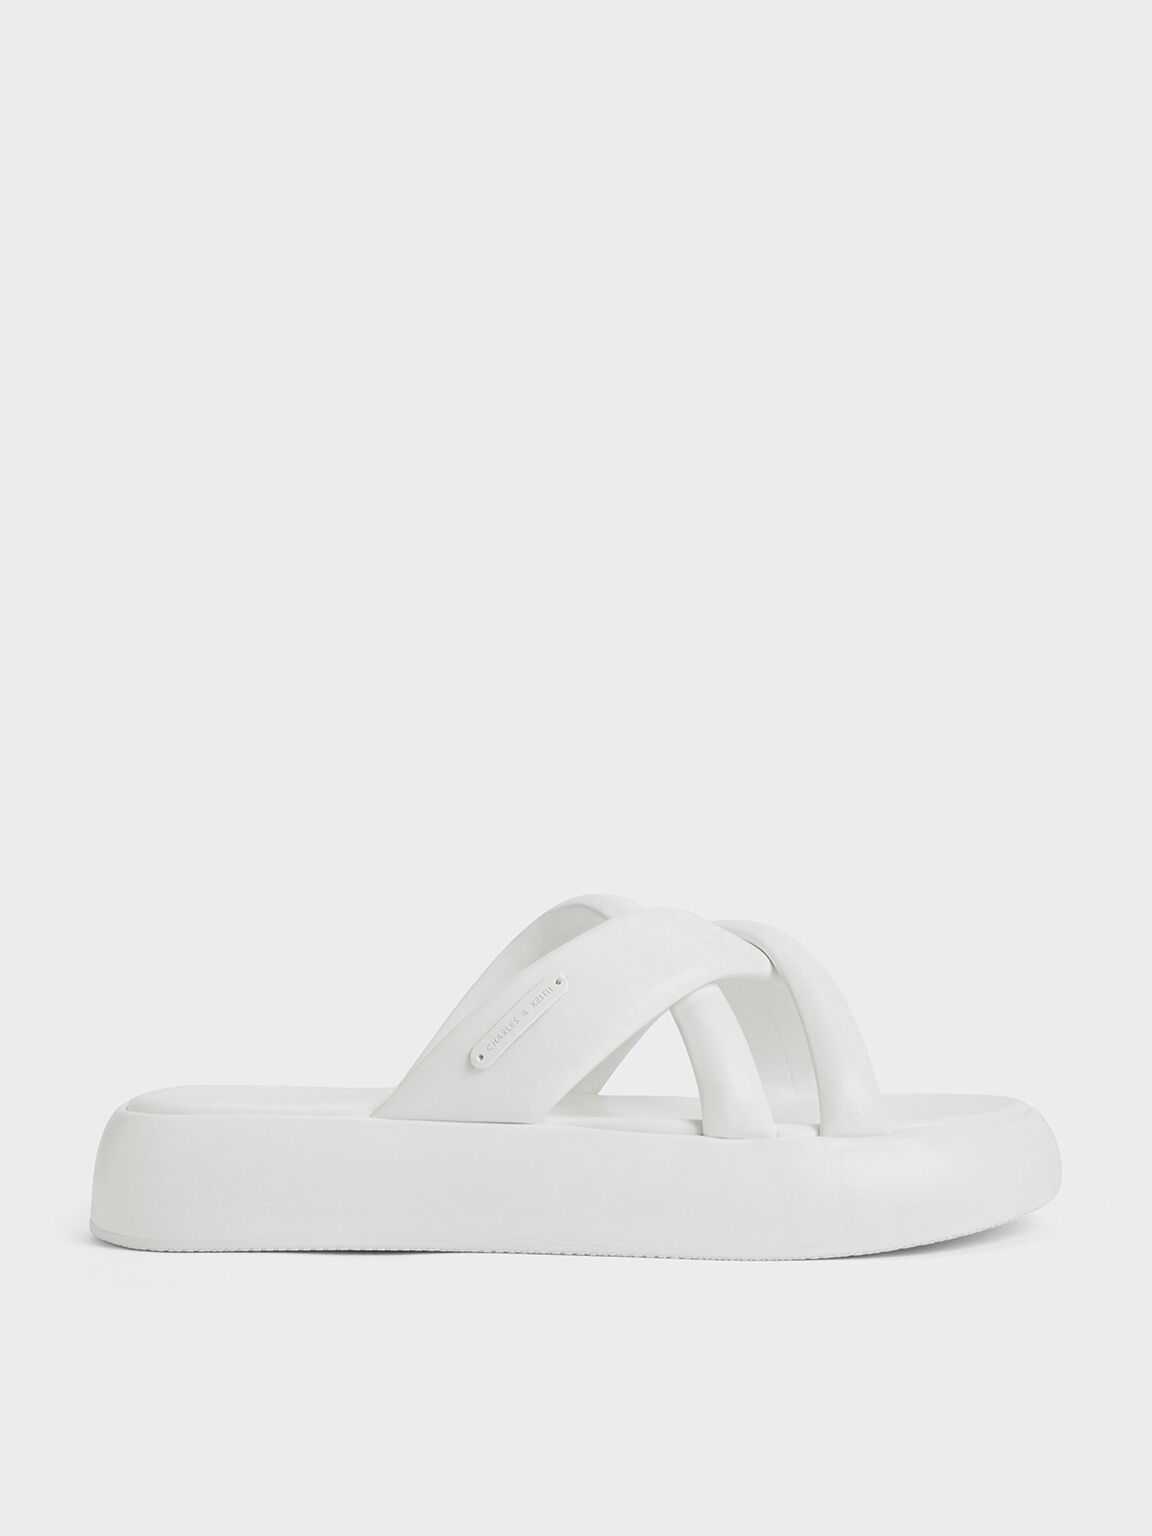 Puffy Crossover-Strap Slide Sandals, White, hi-res